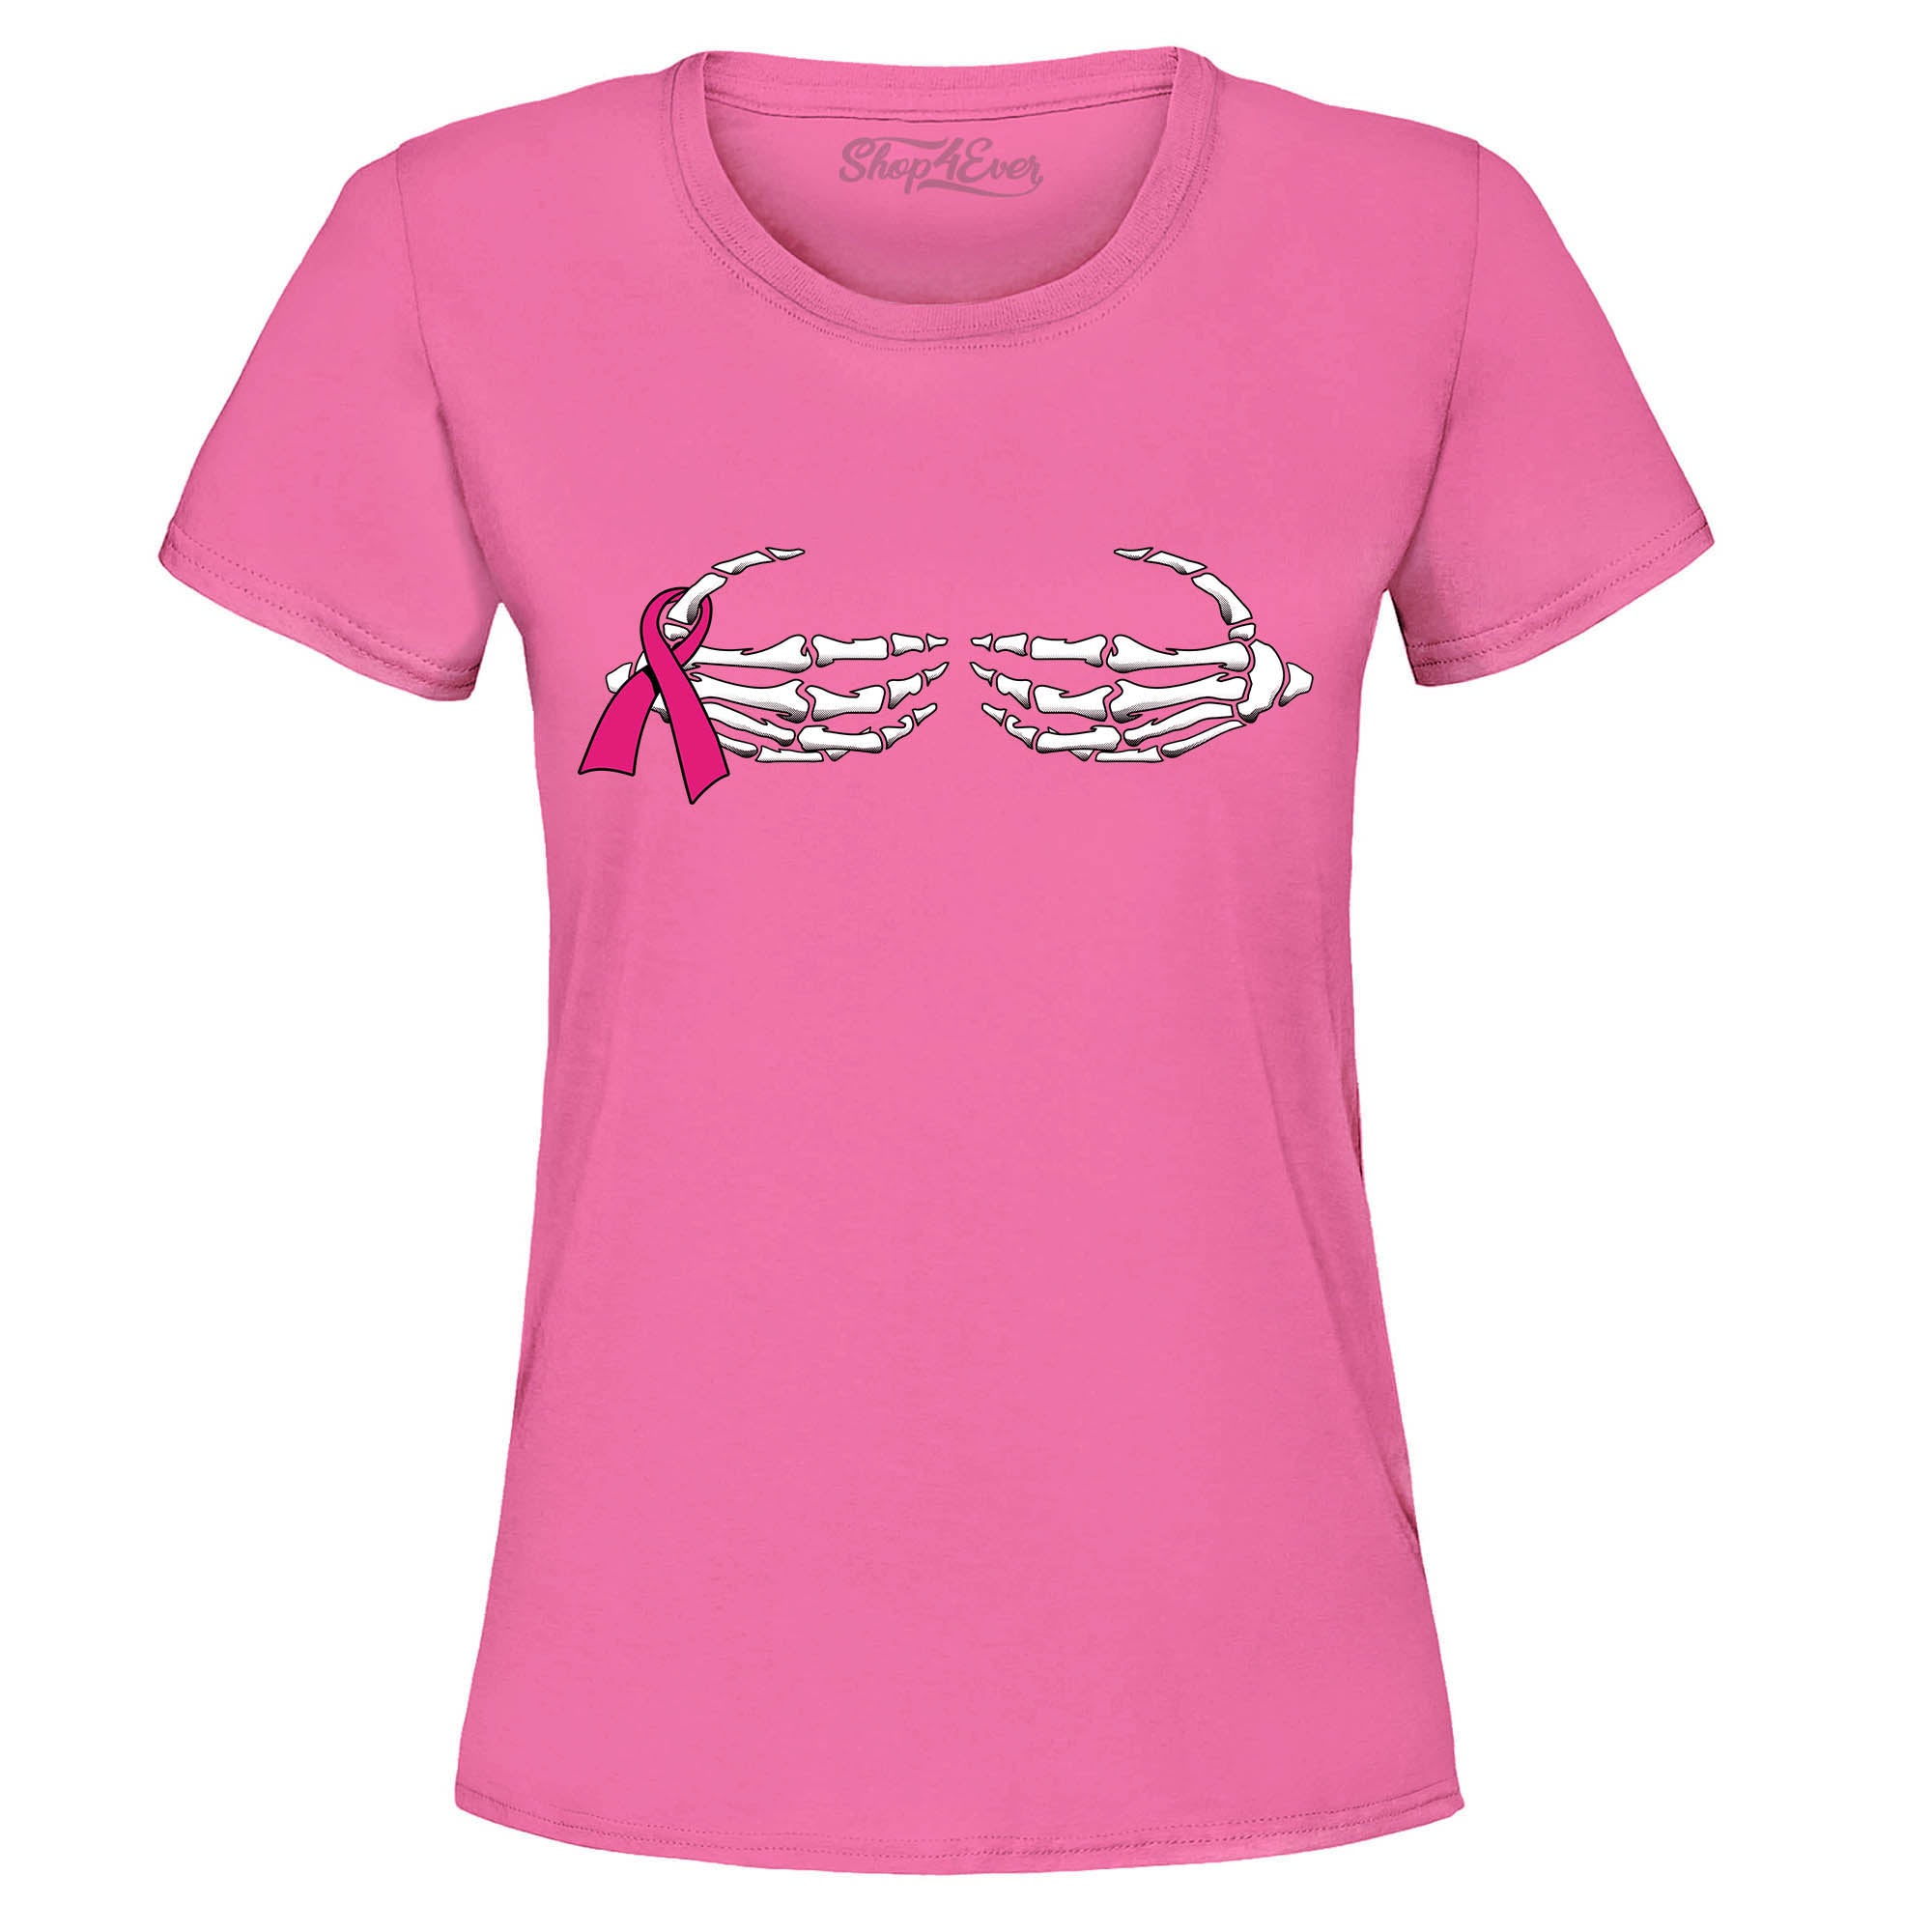 Skeleton Hands Women's T-Shirt Breast Cancer Awareness Shirts